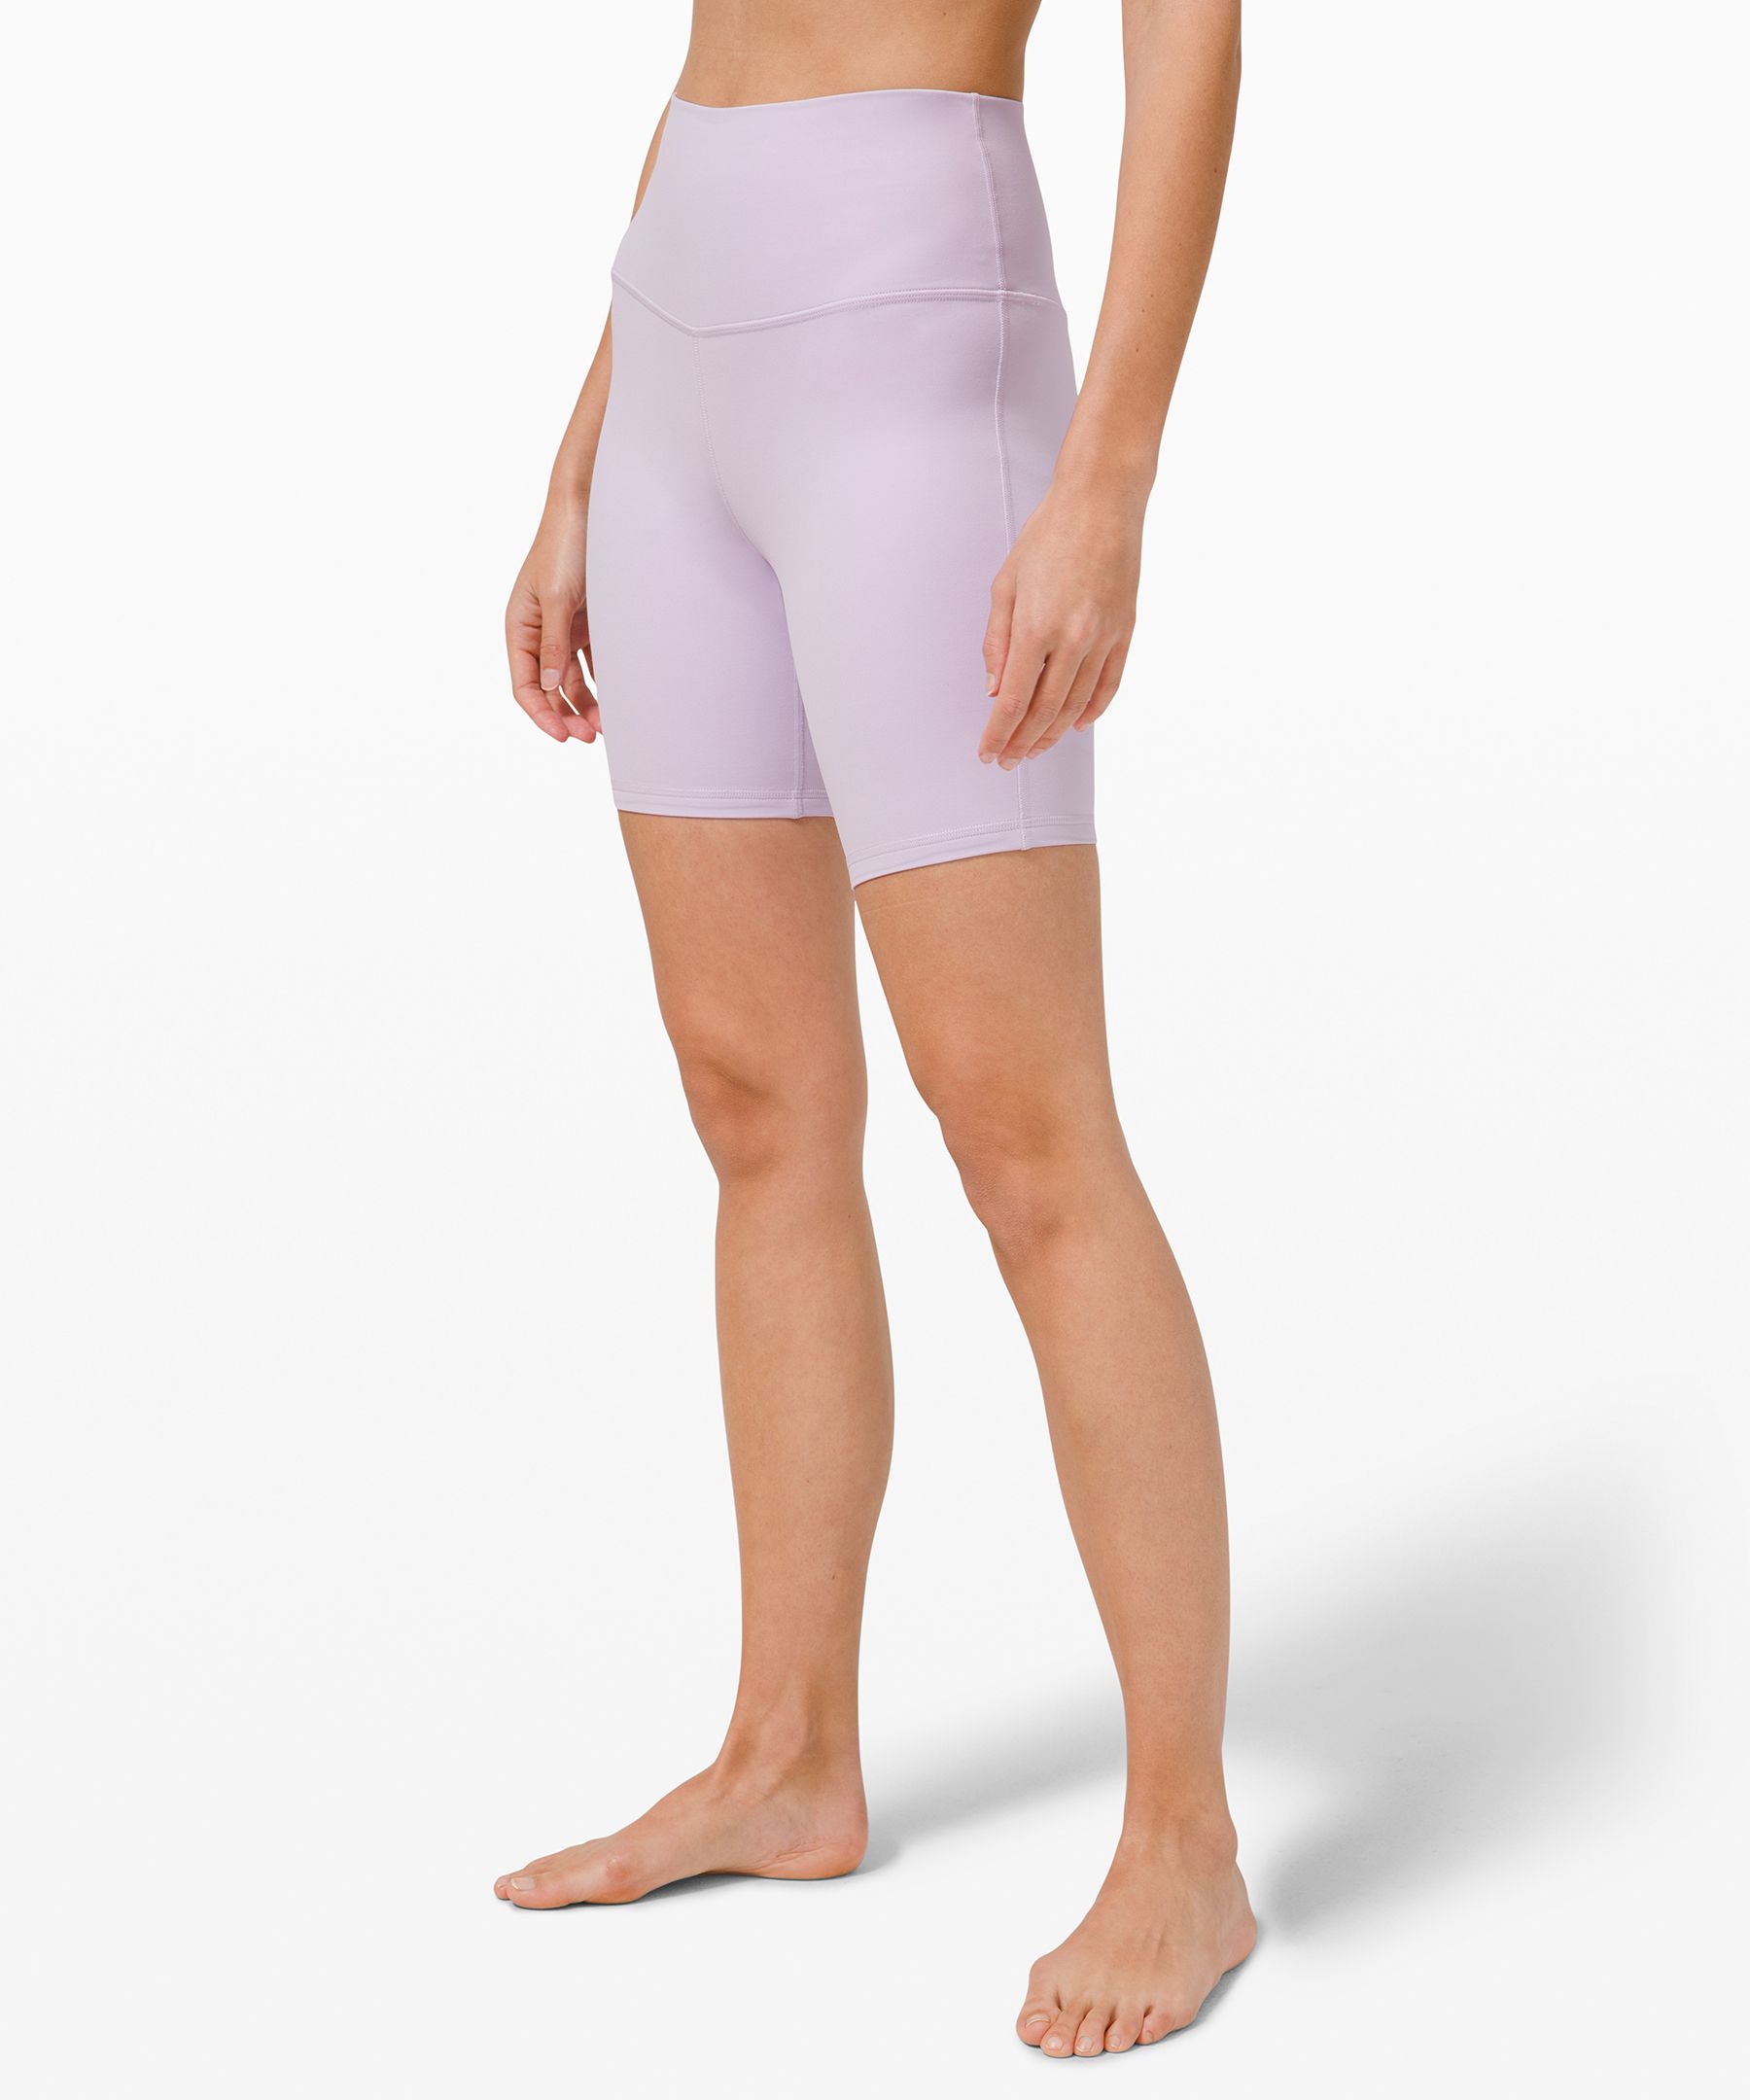 lululemon align shorts review